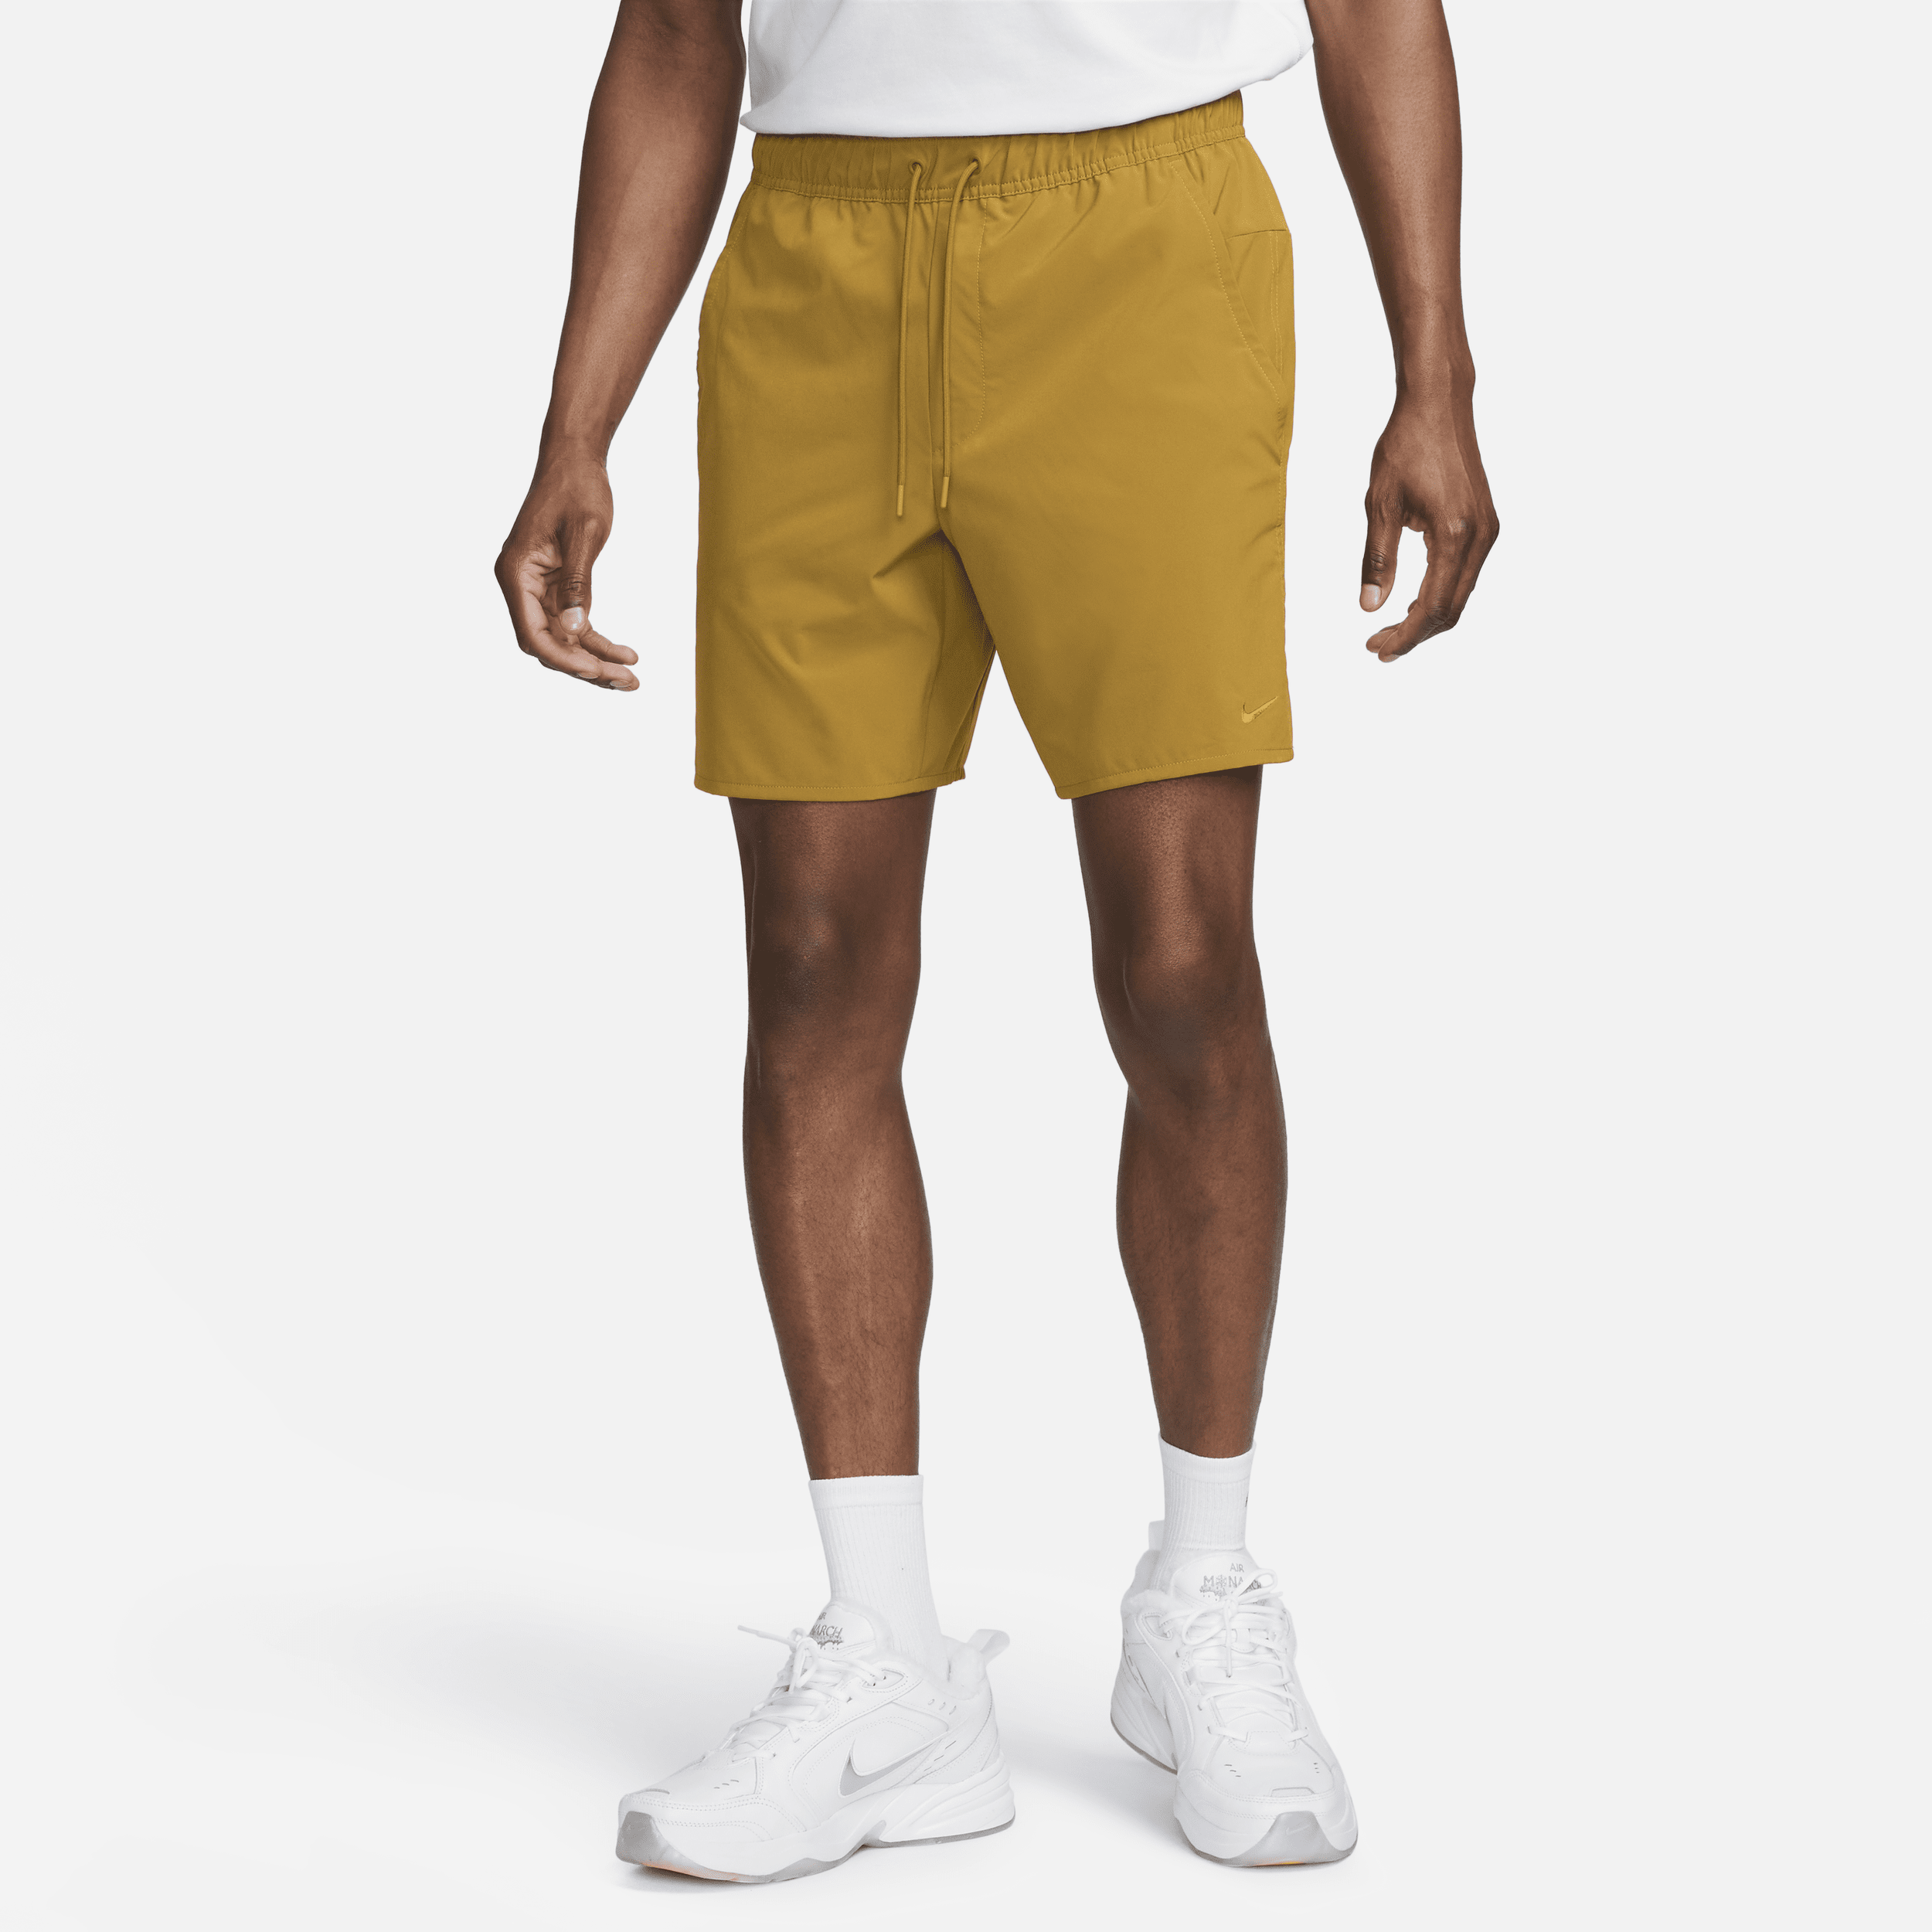 Nike Unlimited Pantalón corto Dri-FIT versátil de 18 cm sin forro - Hombre - Marrón